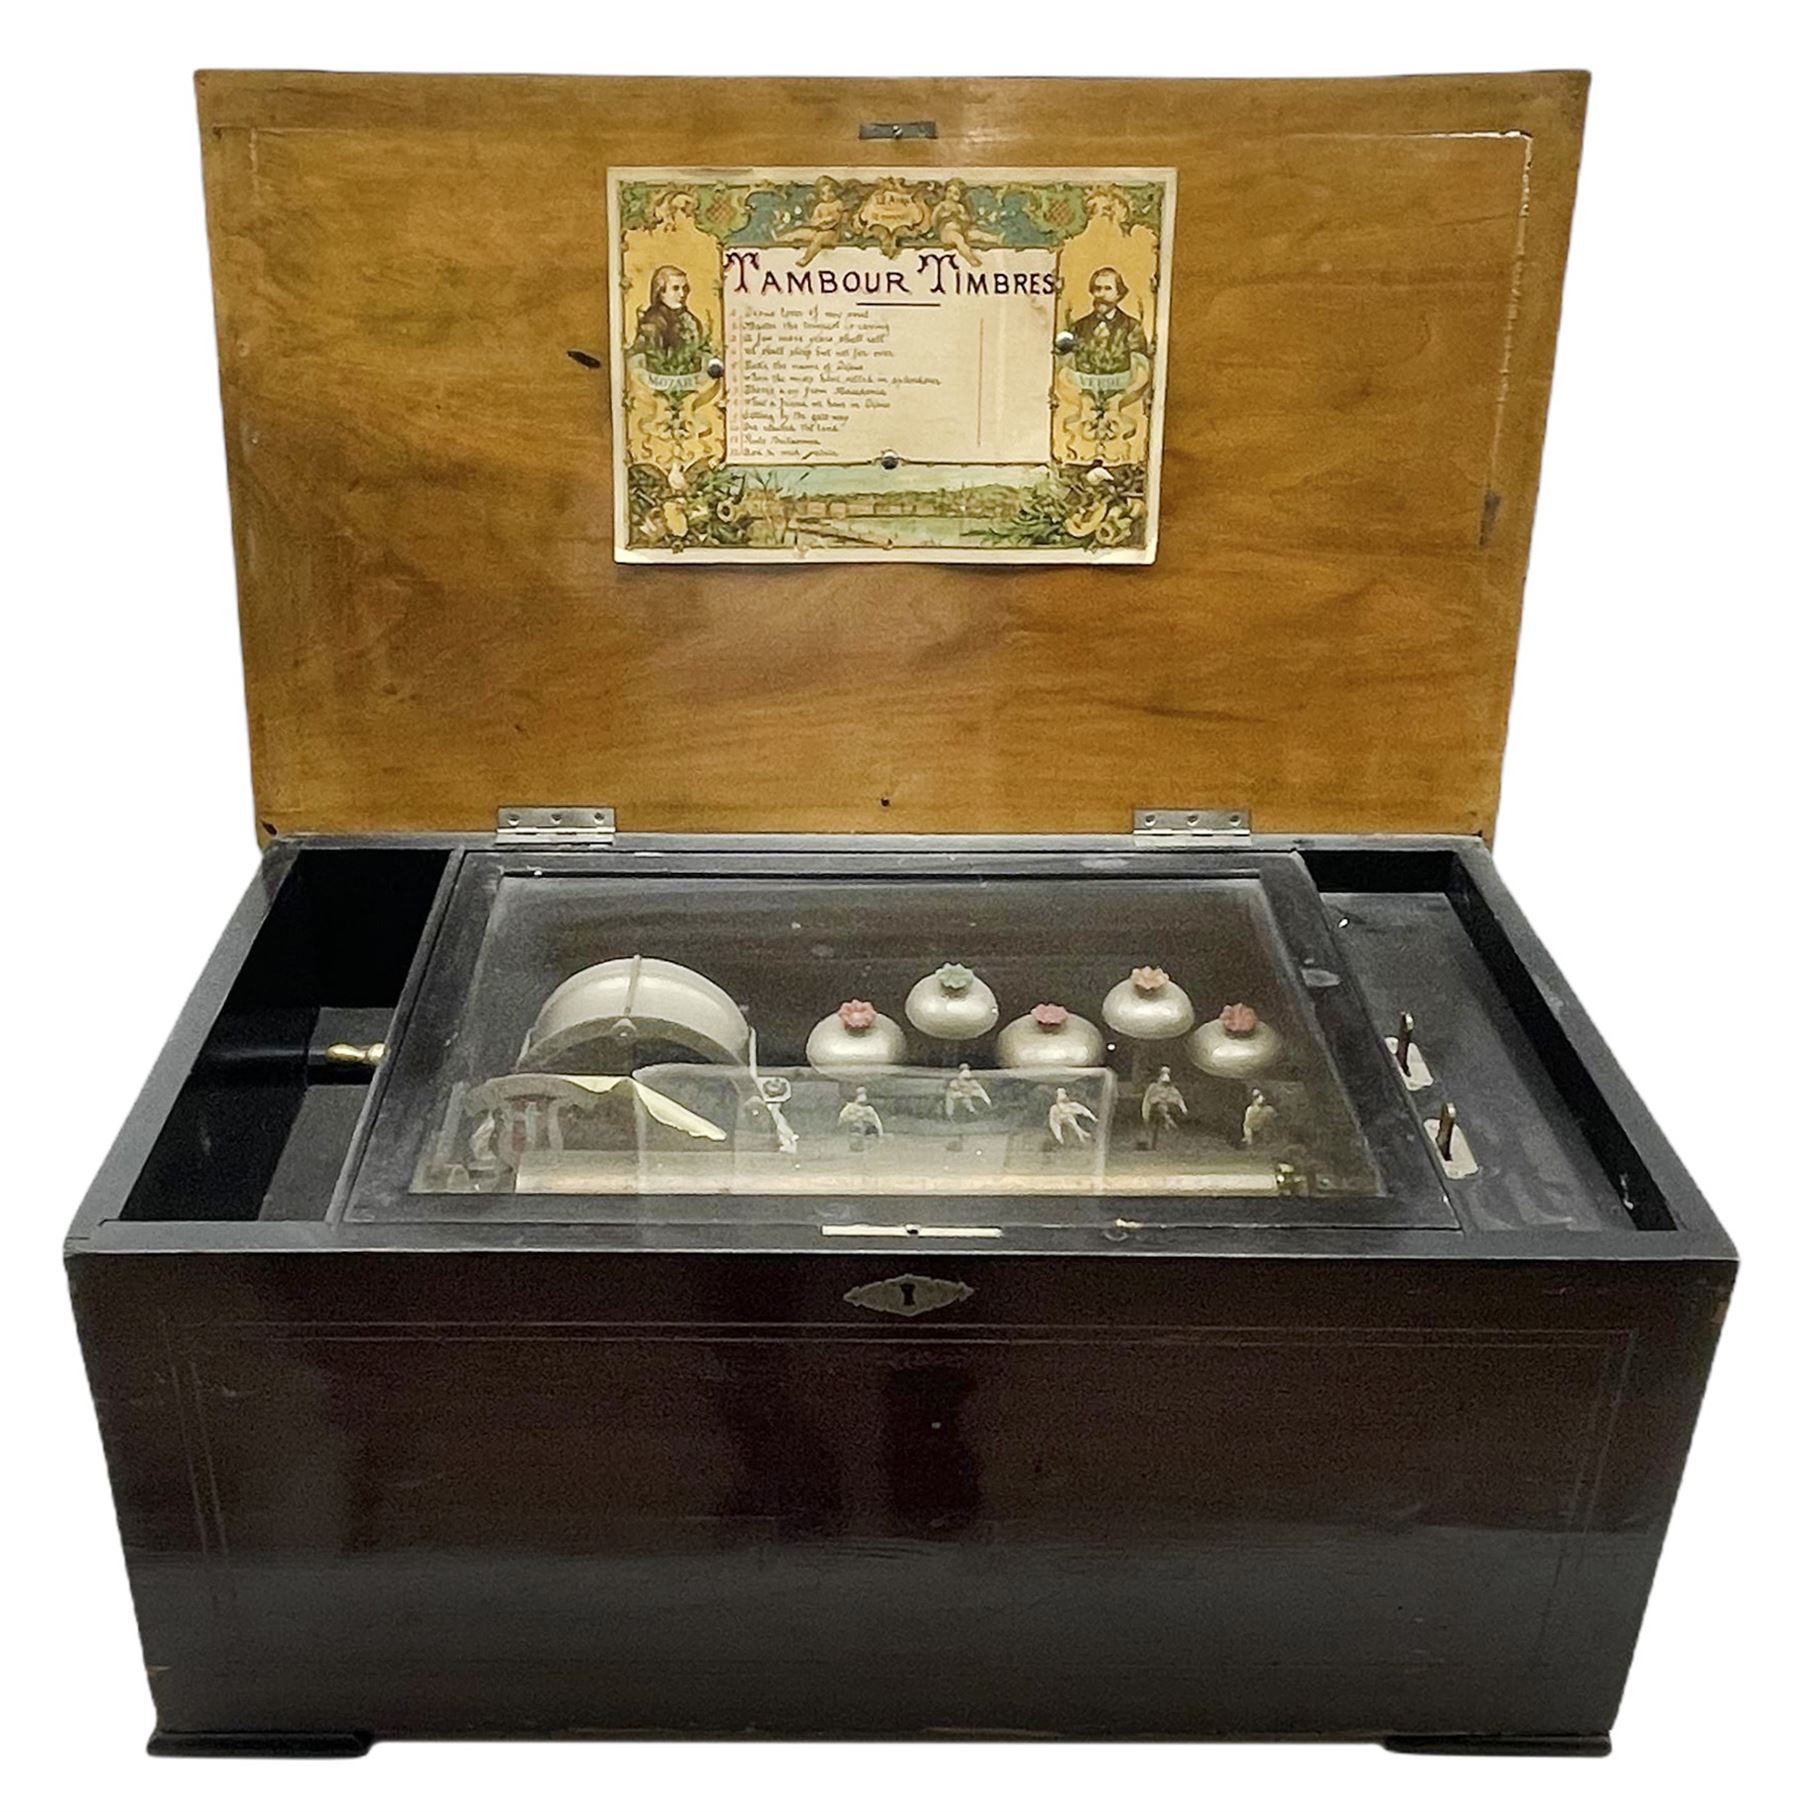 Late 19th century Swiss twelve air music box